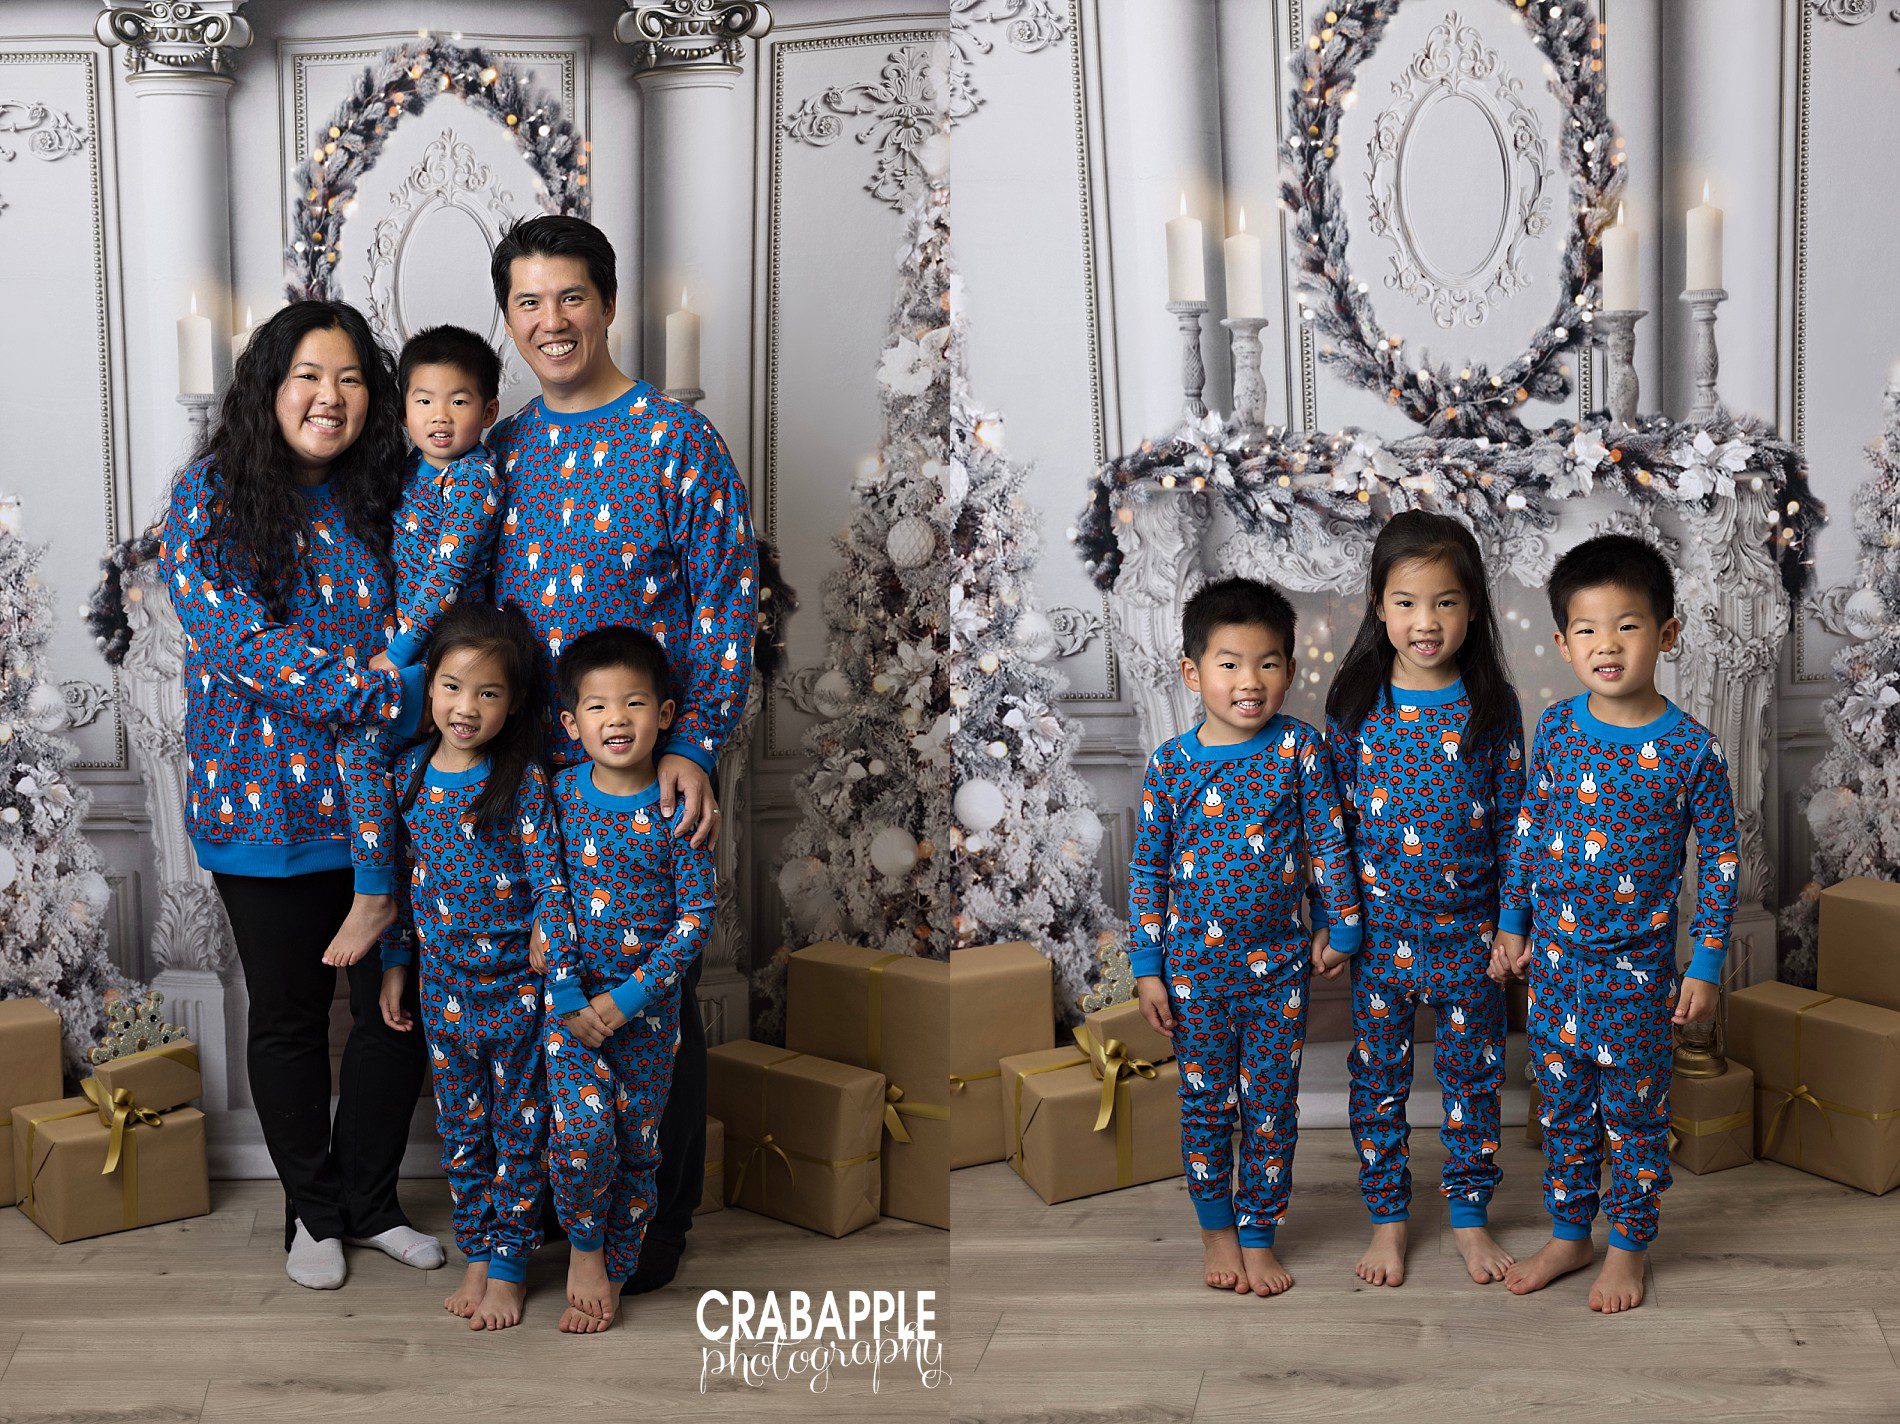 professional xmas portrait ideas with family matching pajamas